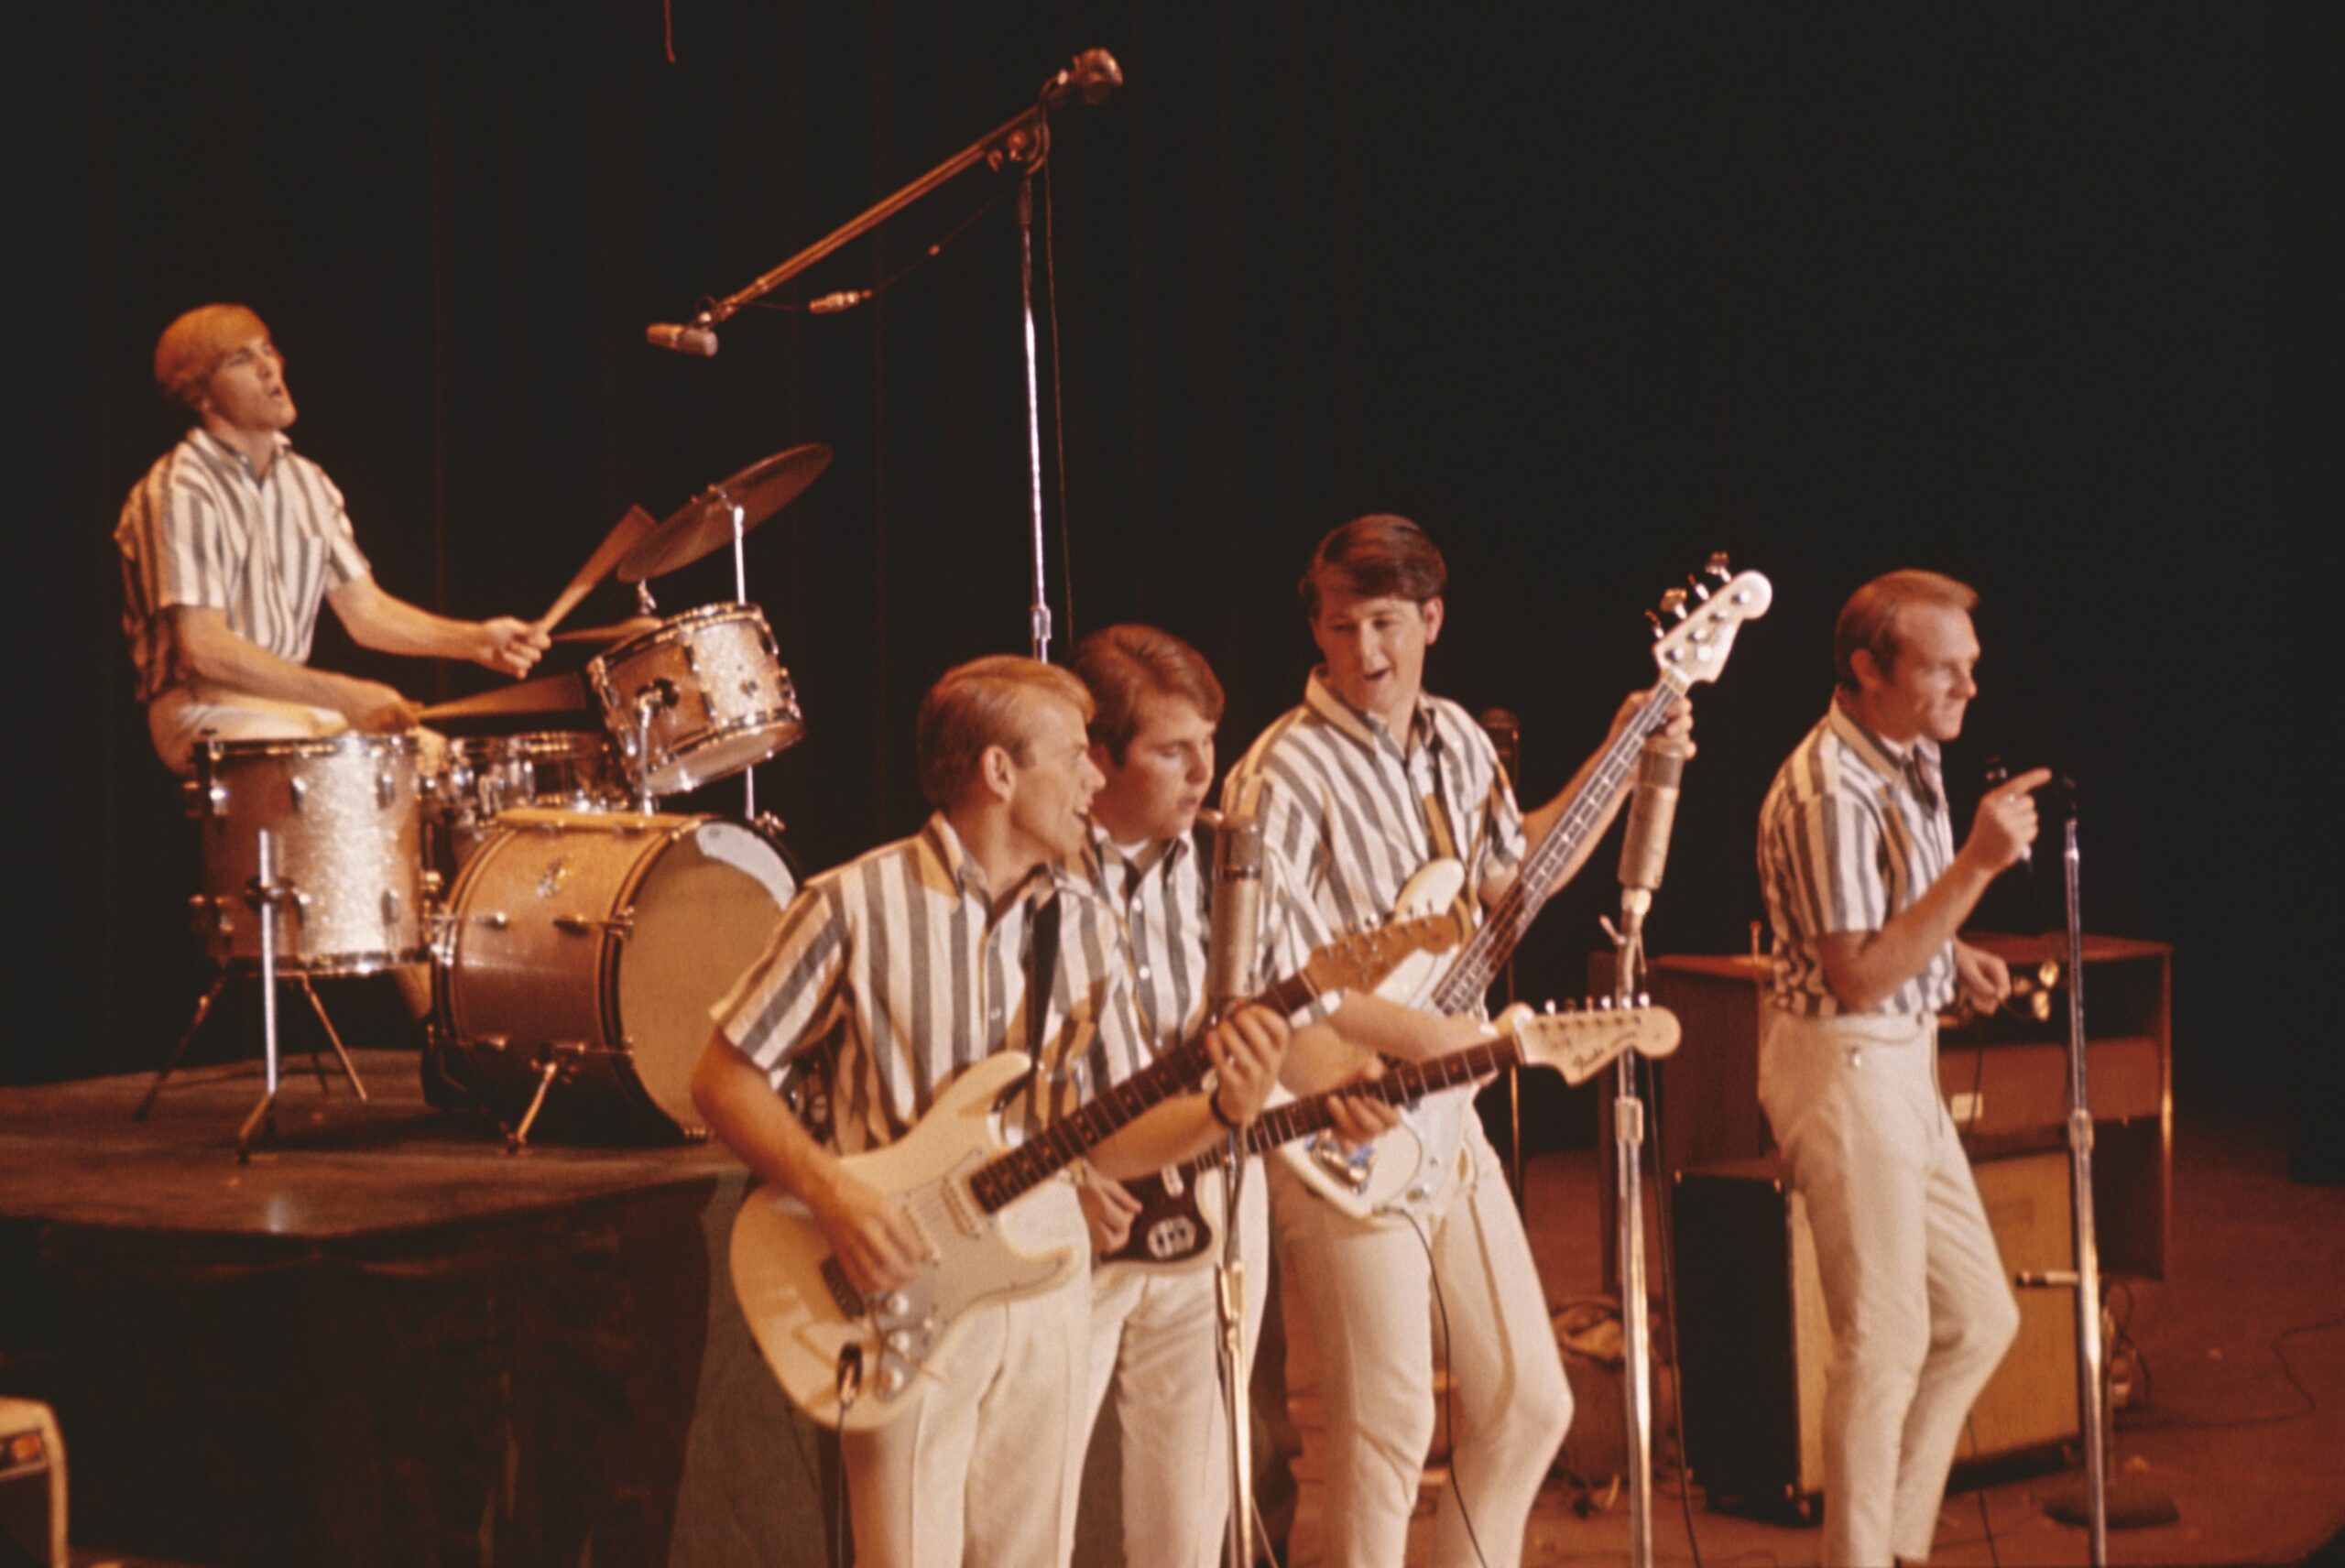 Rock and roll band The Beach Boys perform onstage in circa 1964 in California. (L-R) Dennis Wilson, Al Jardine, Carl Wilson, Brian Wilson, Mike Love.